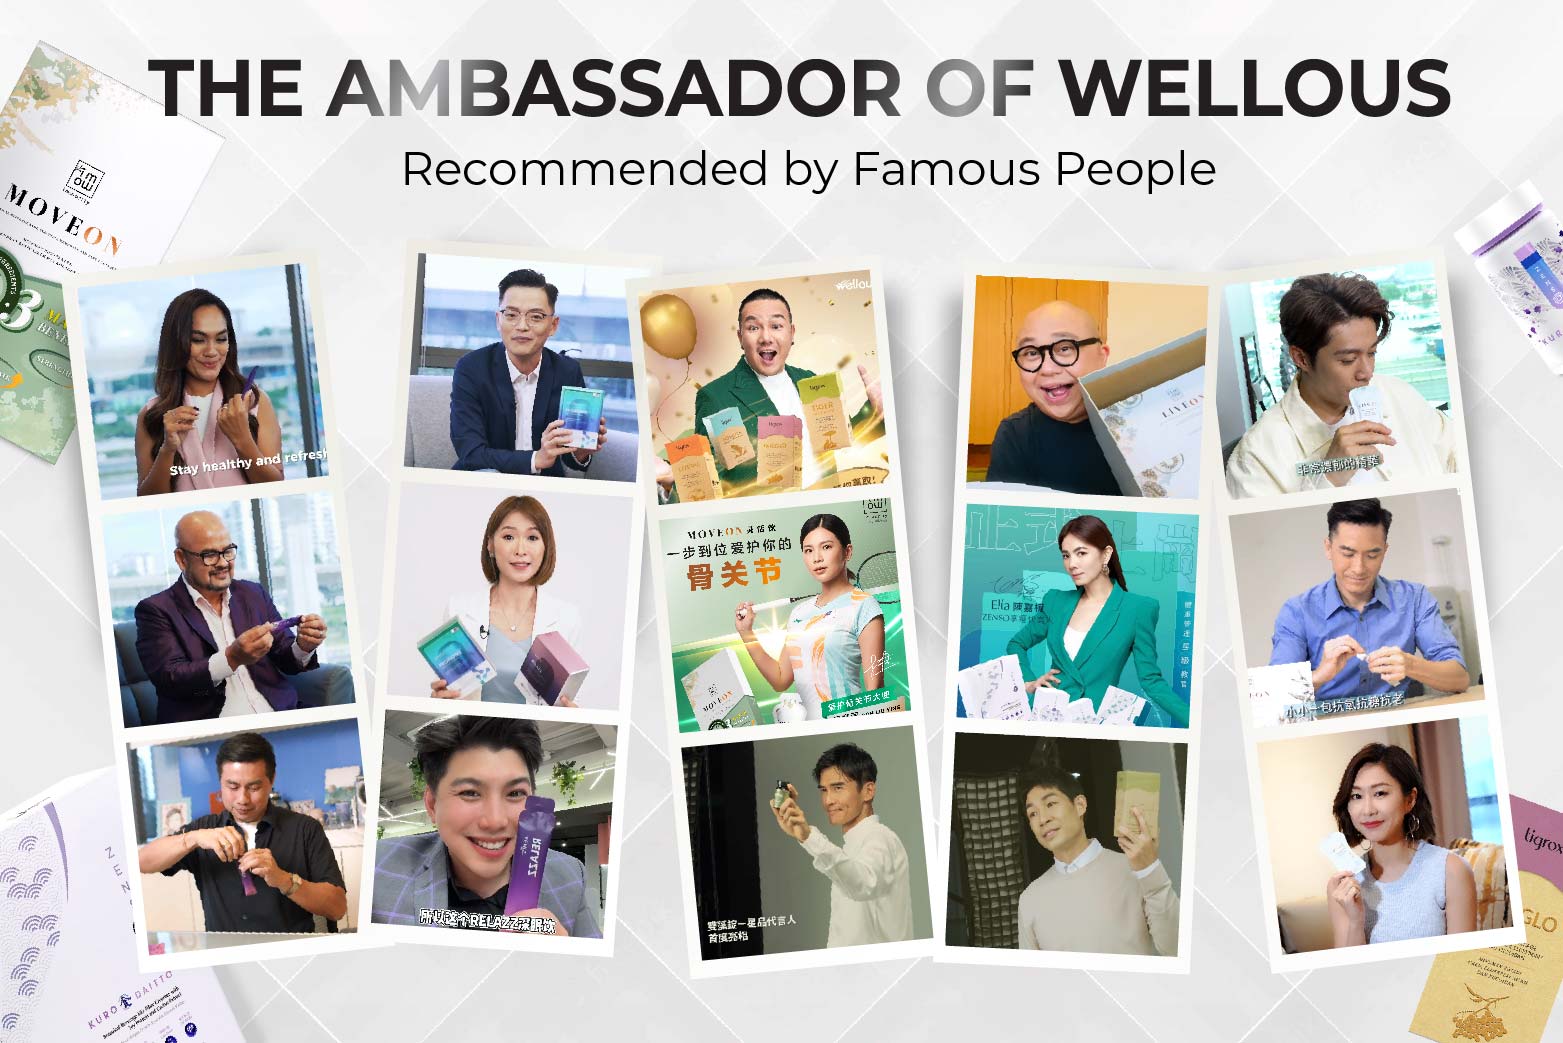 Ambassador of Wellous